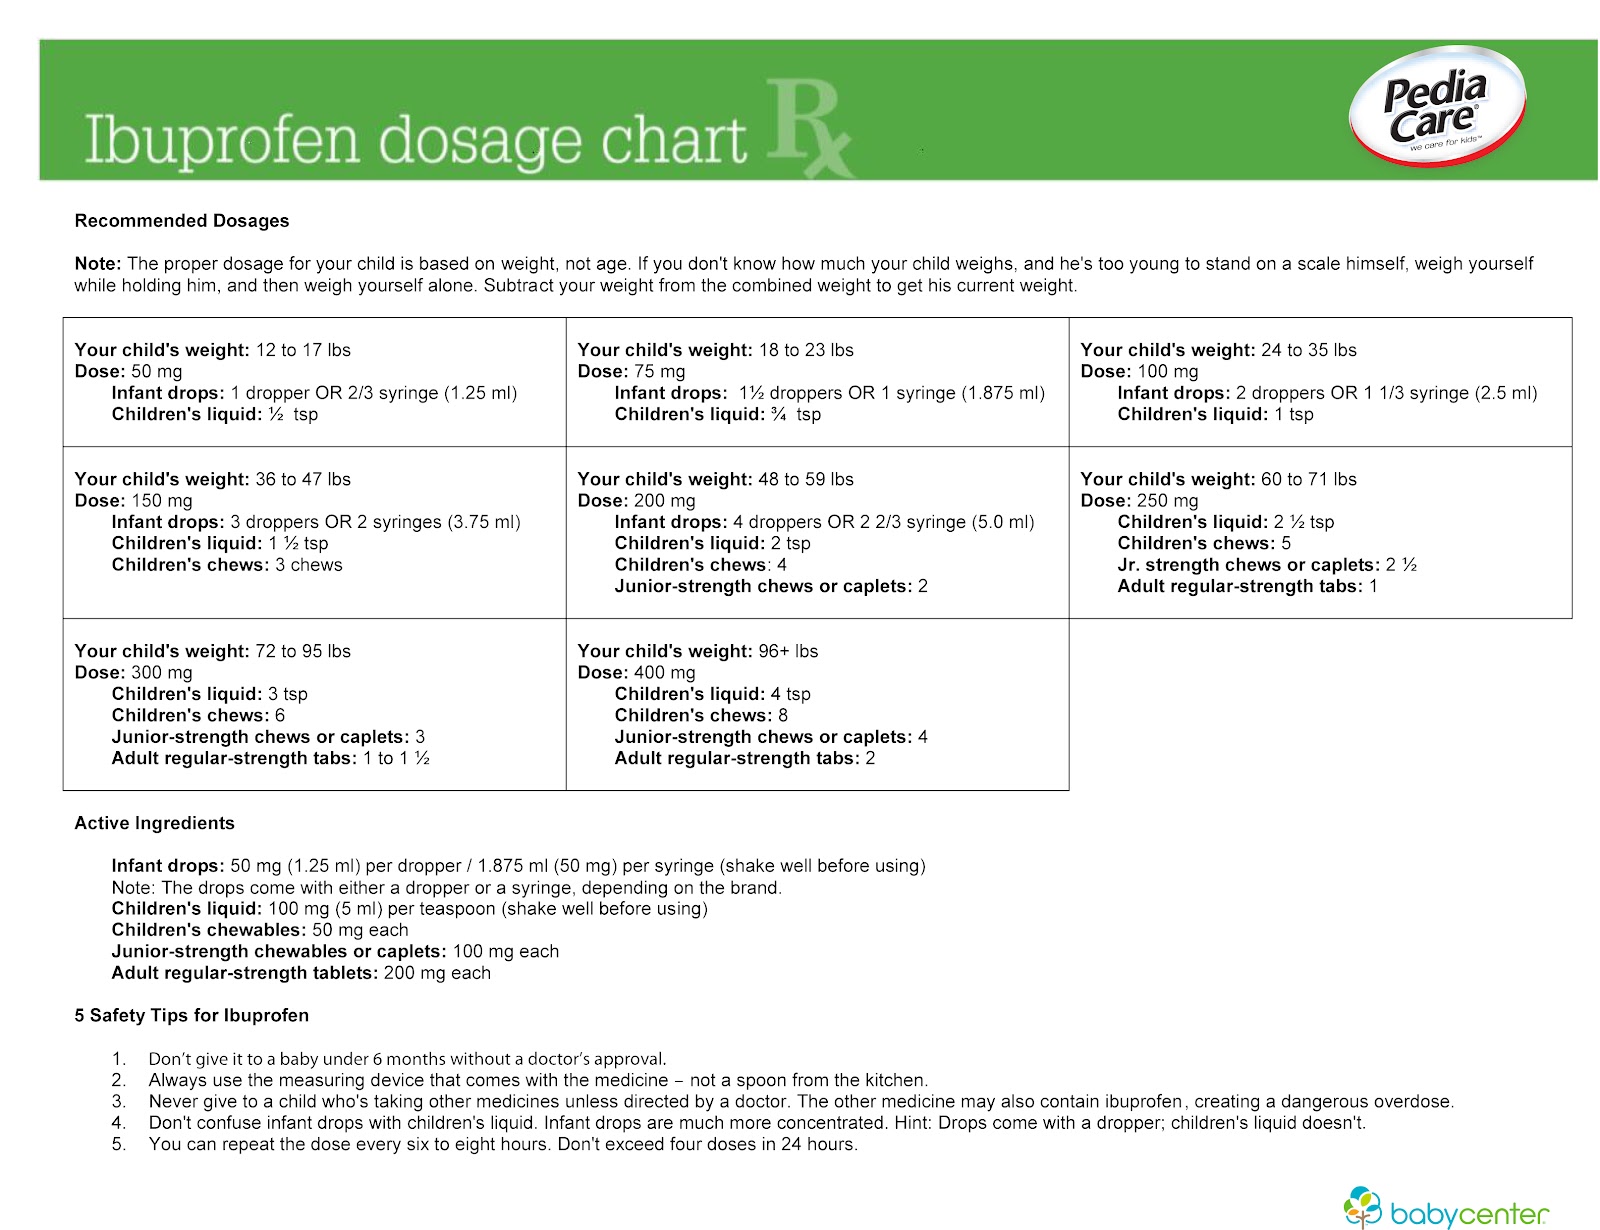 Pediacare Ibuprofen Dosage Chart